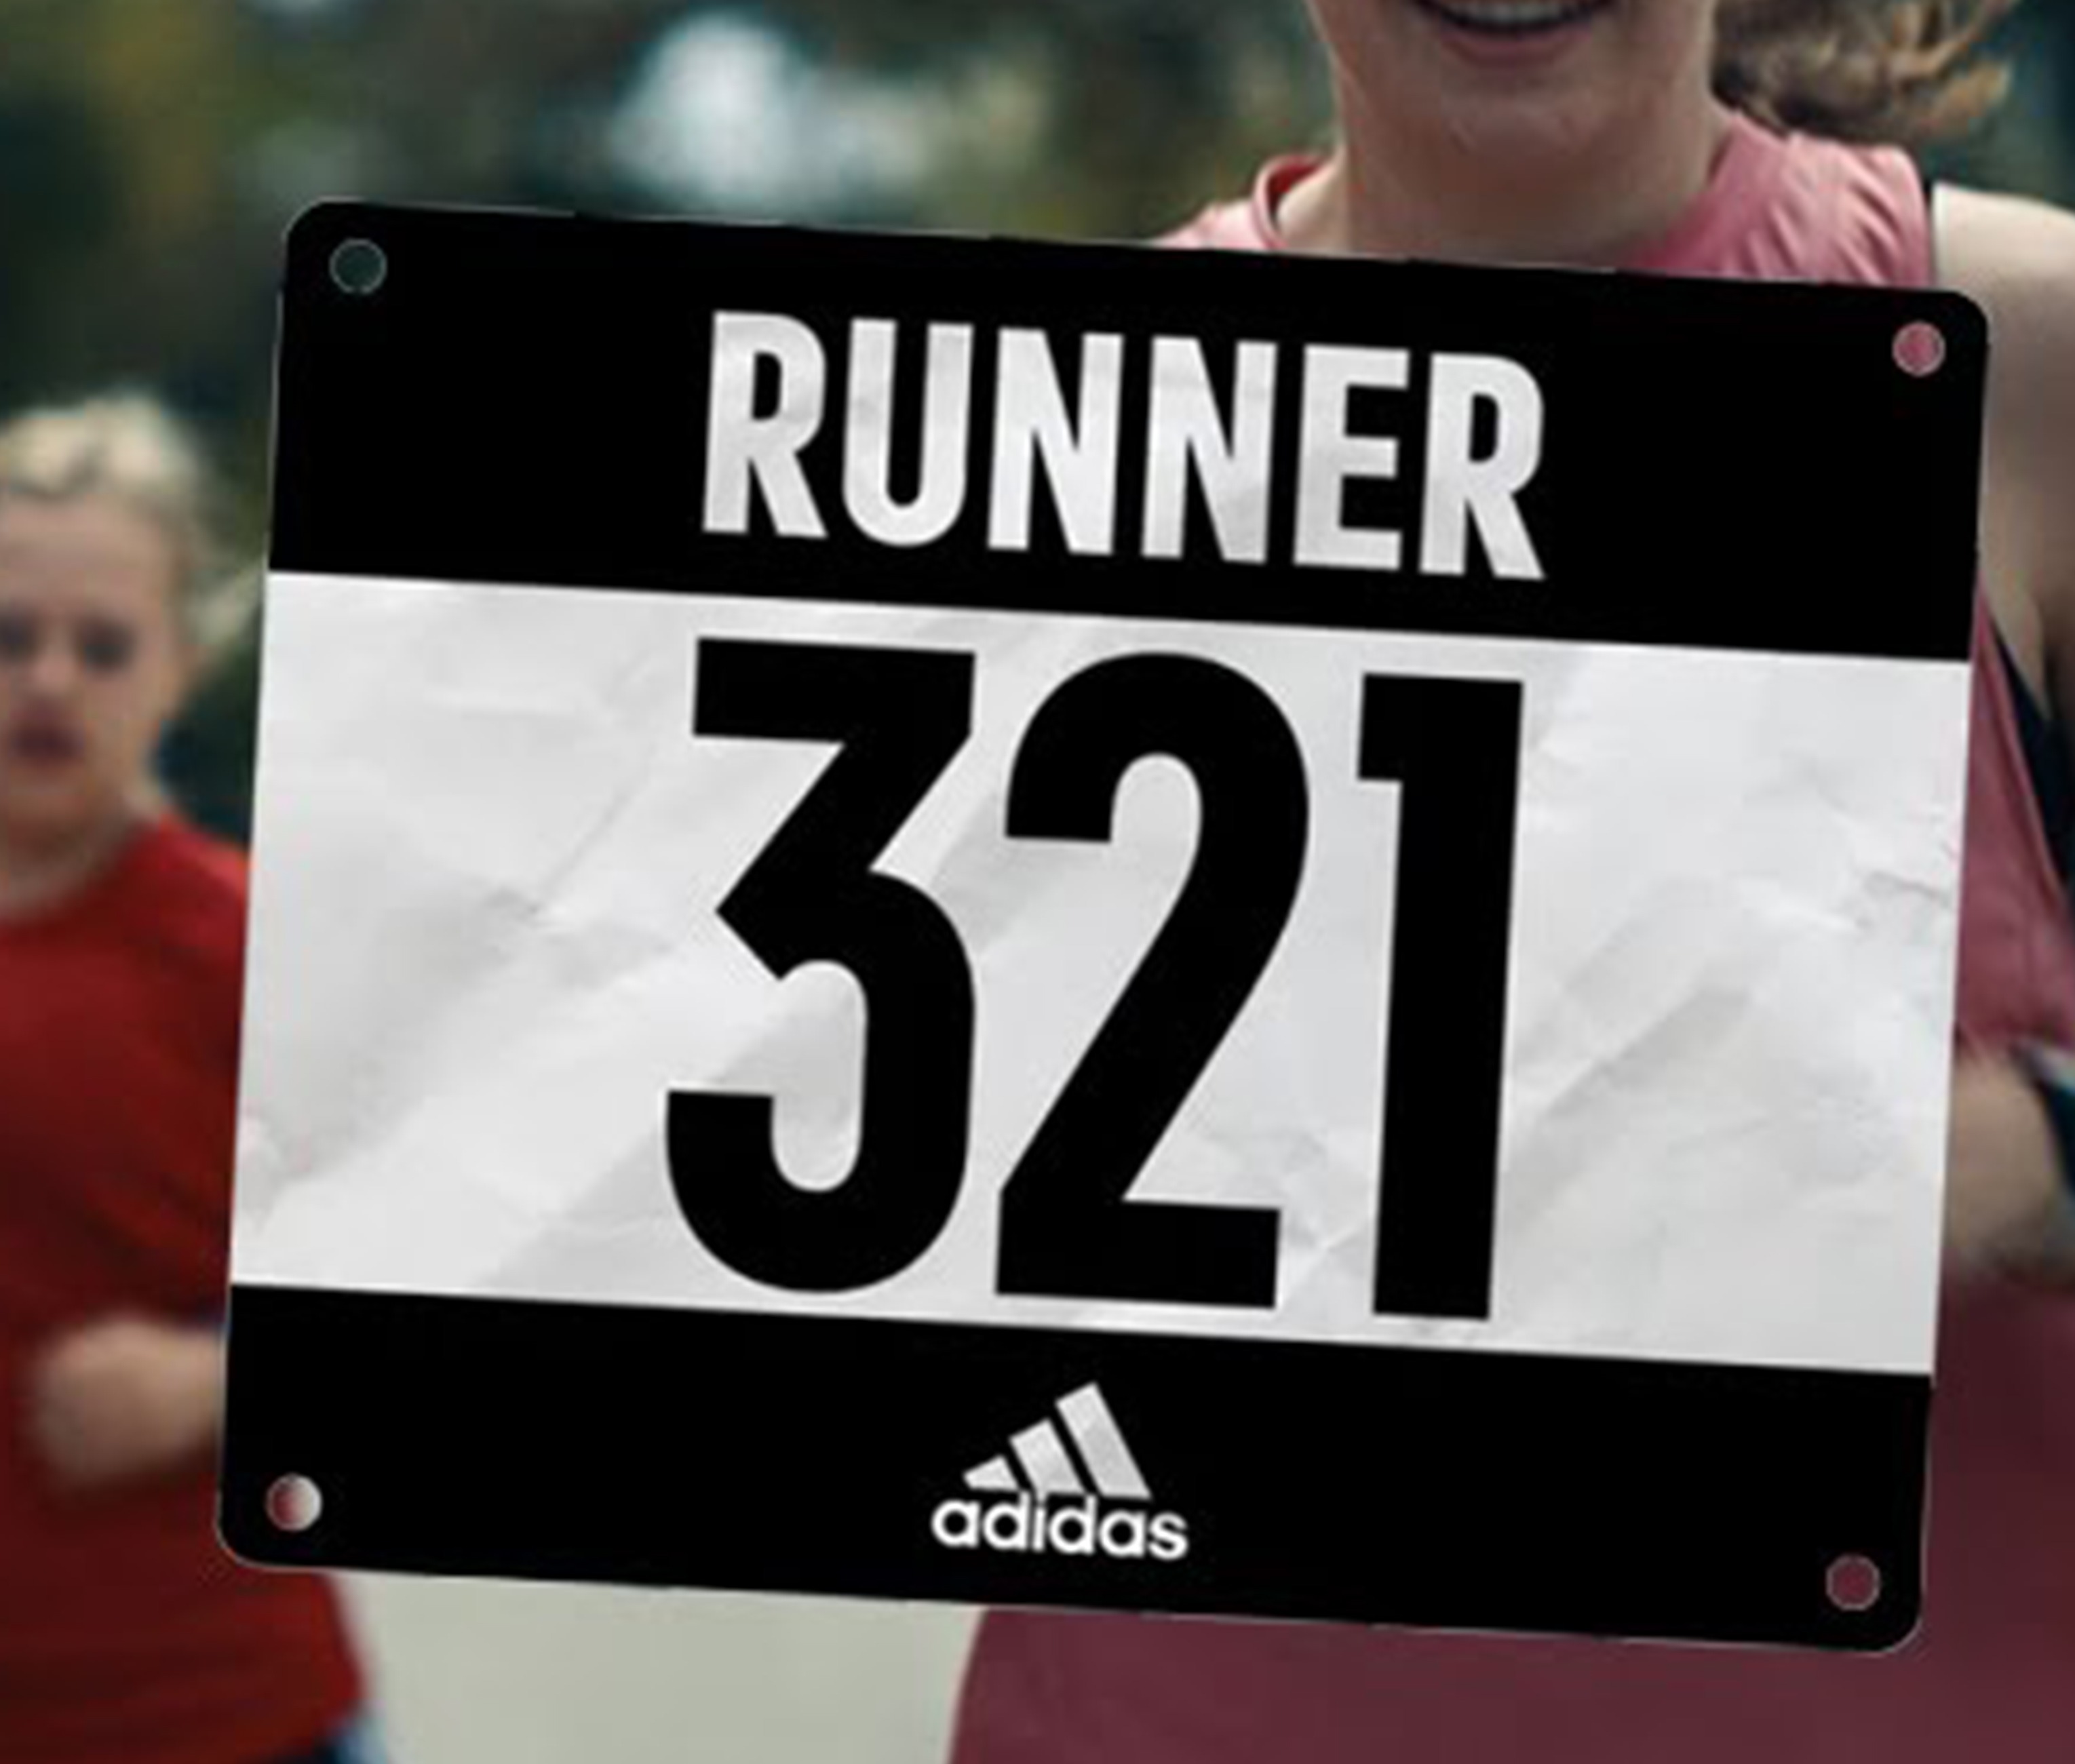 runner 321 adidas case study